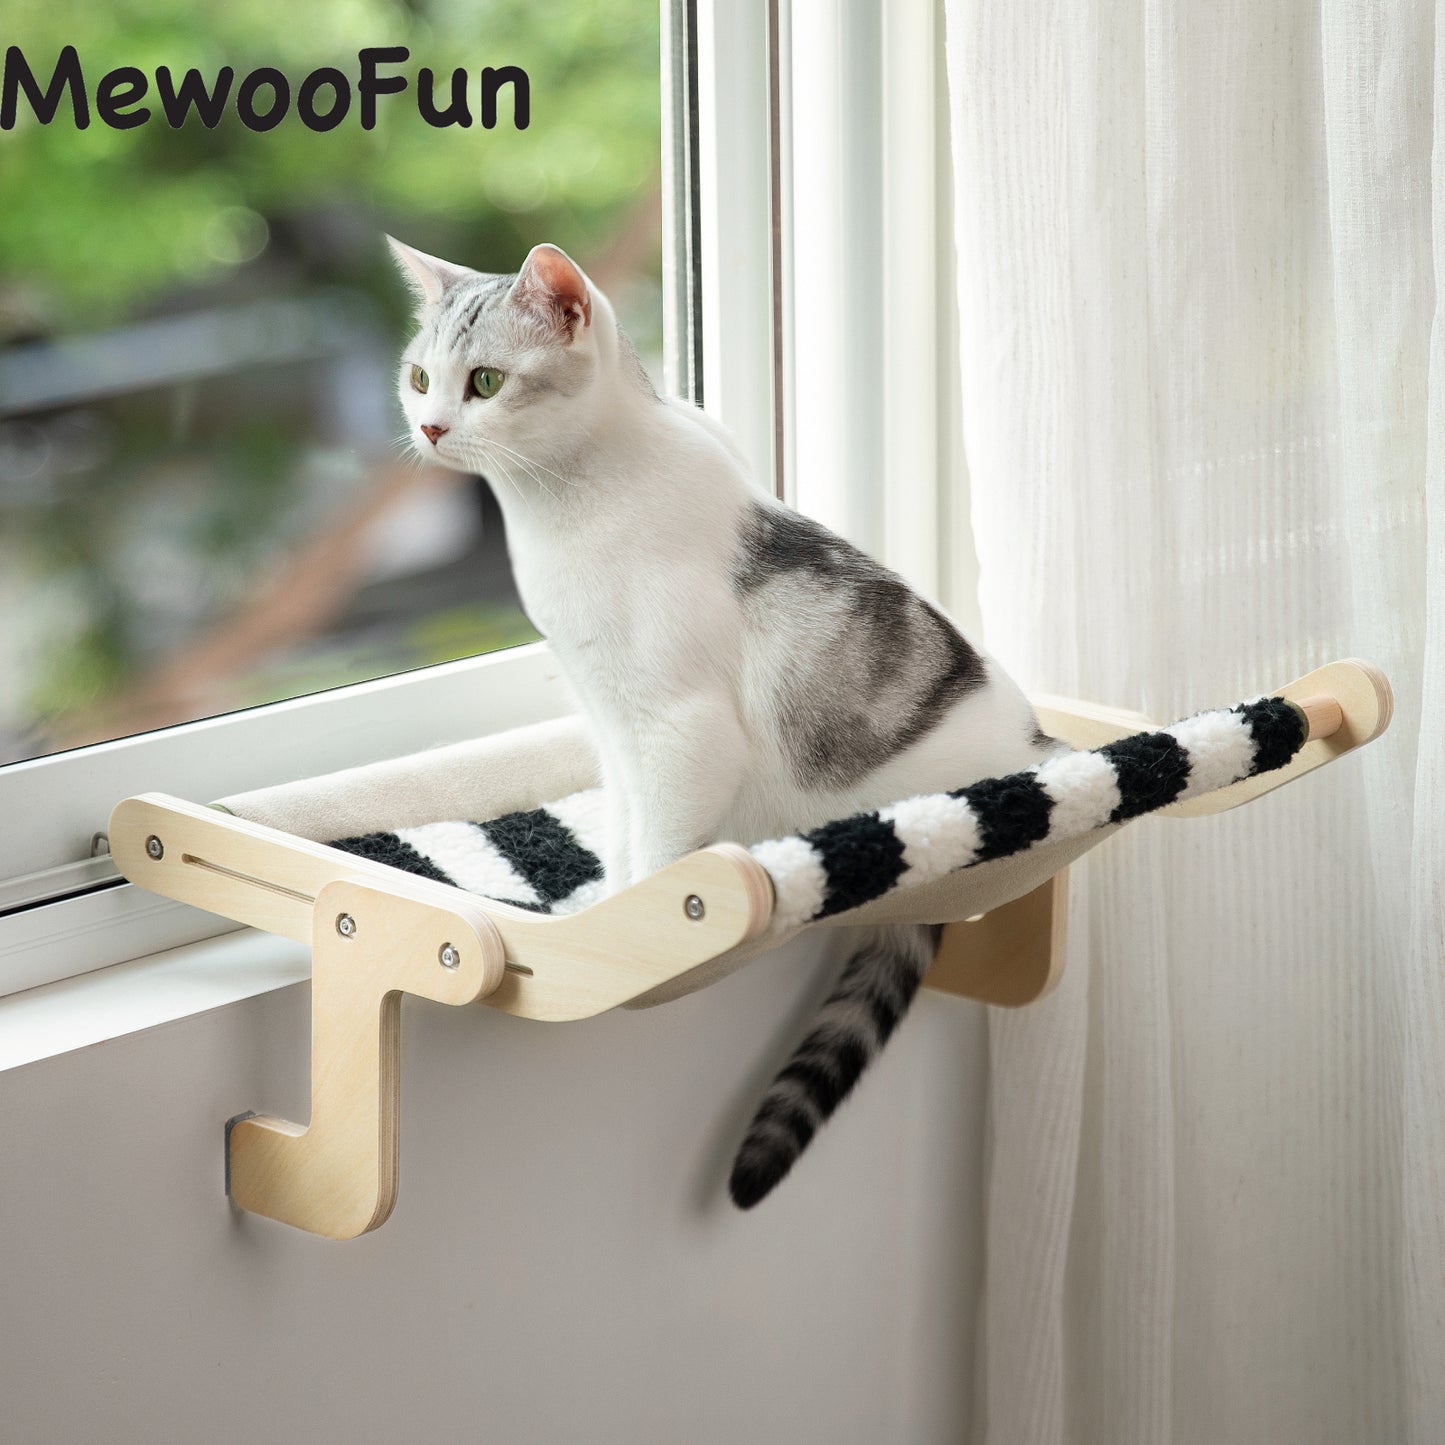 Mewoofun Cat Window Perch Hanging Bed